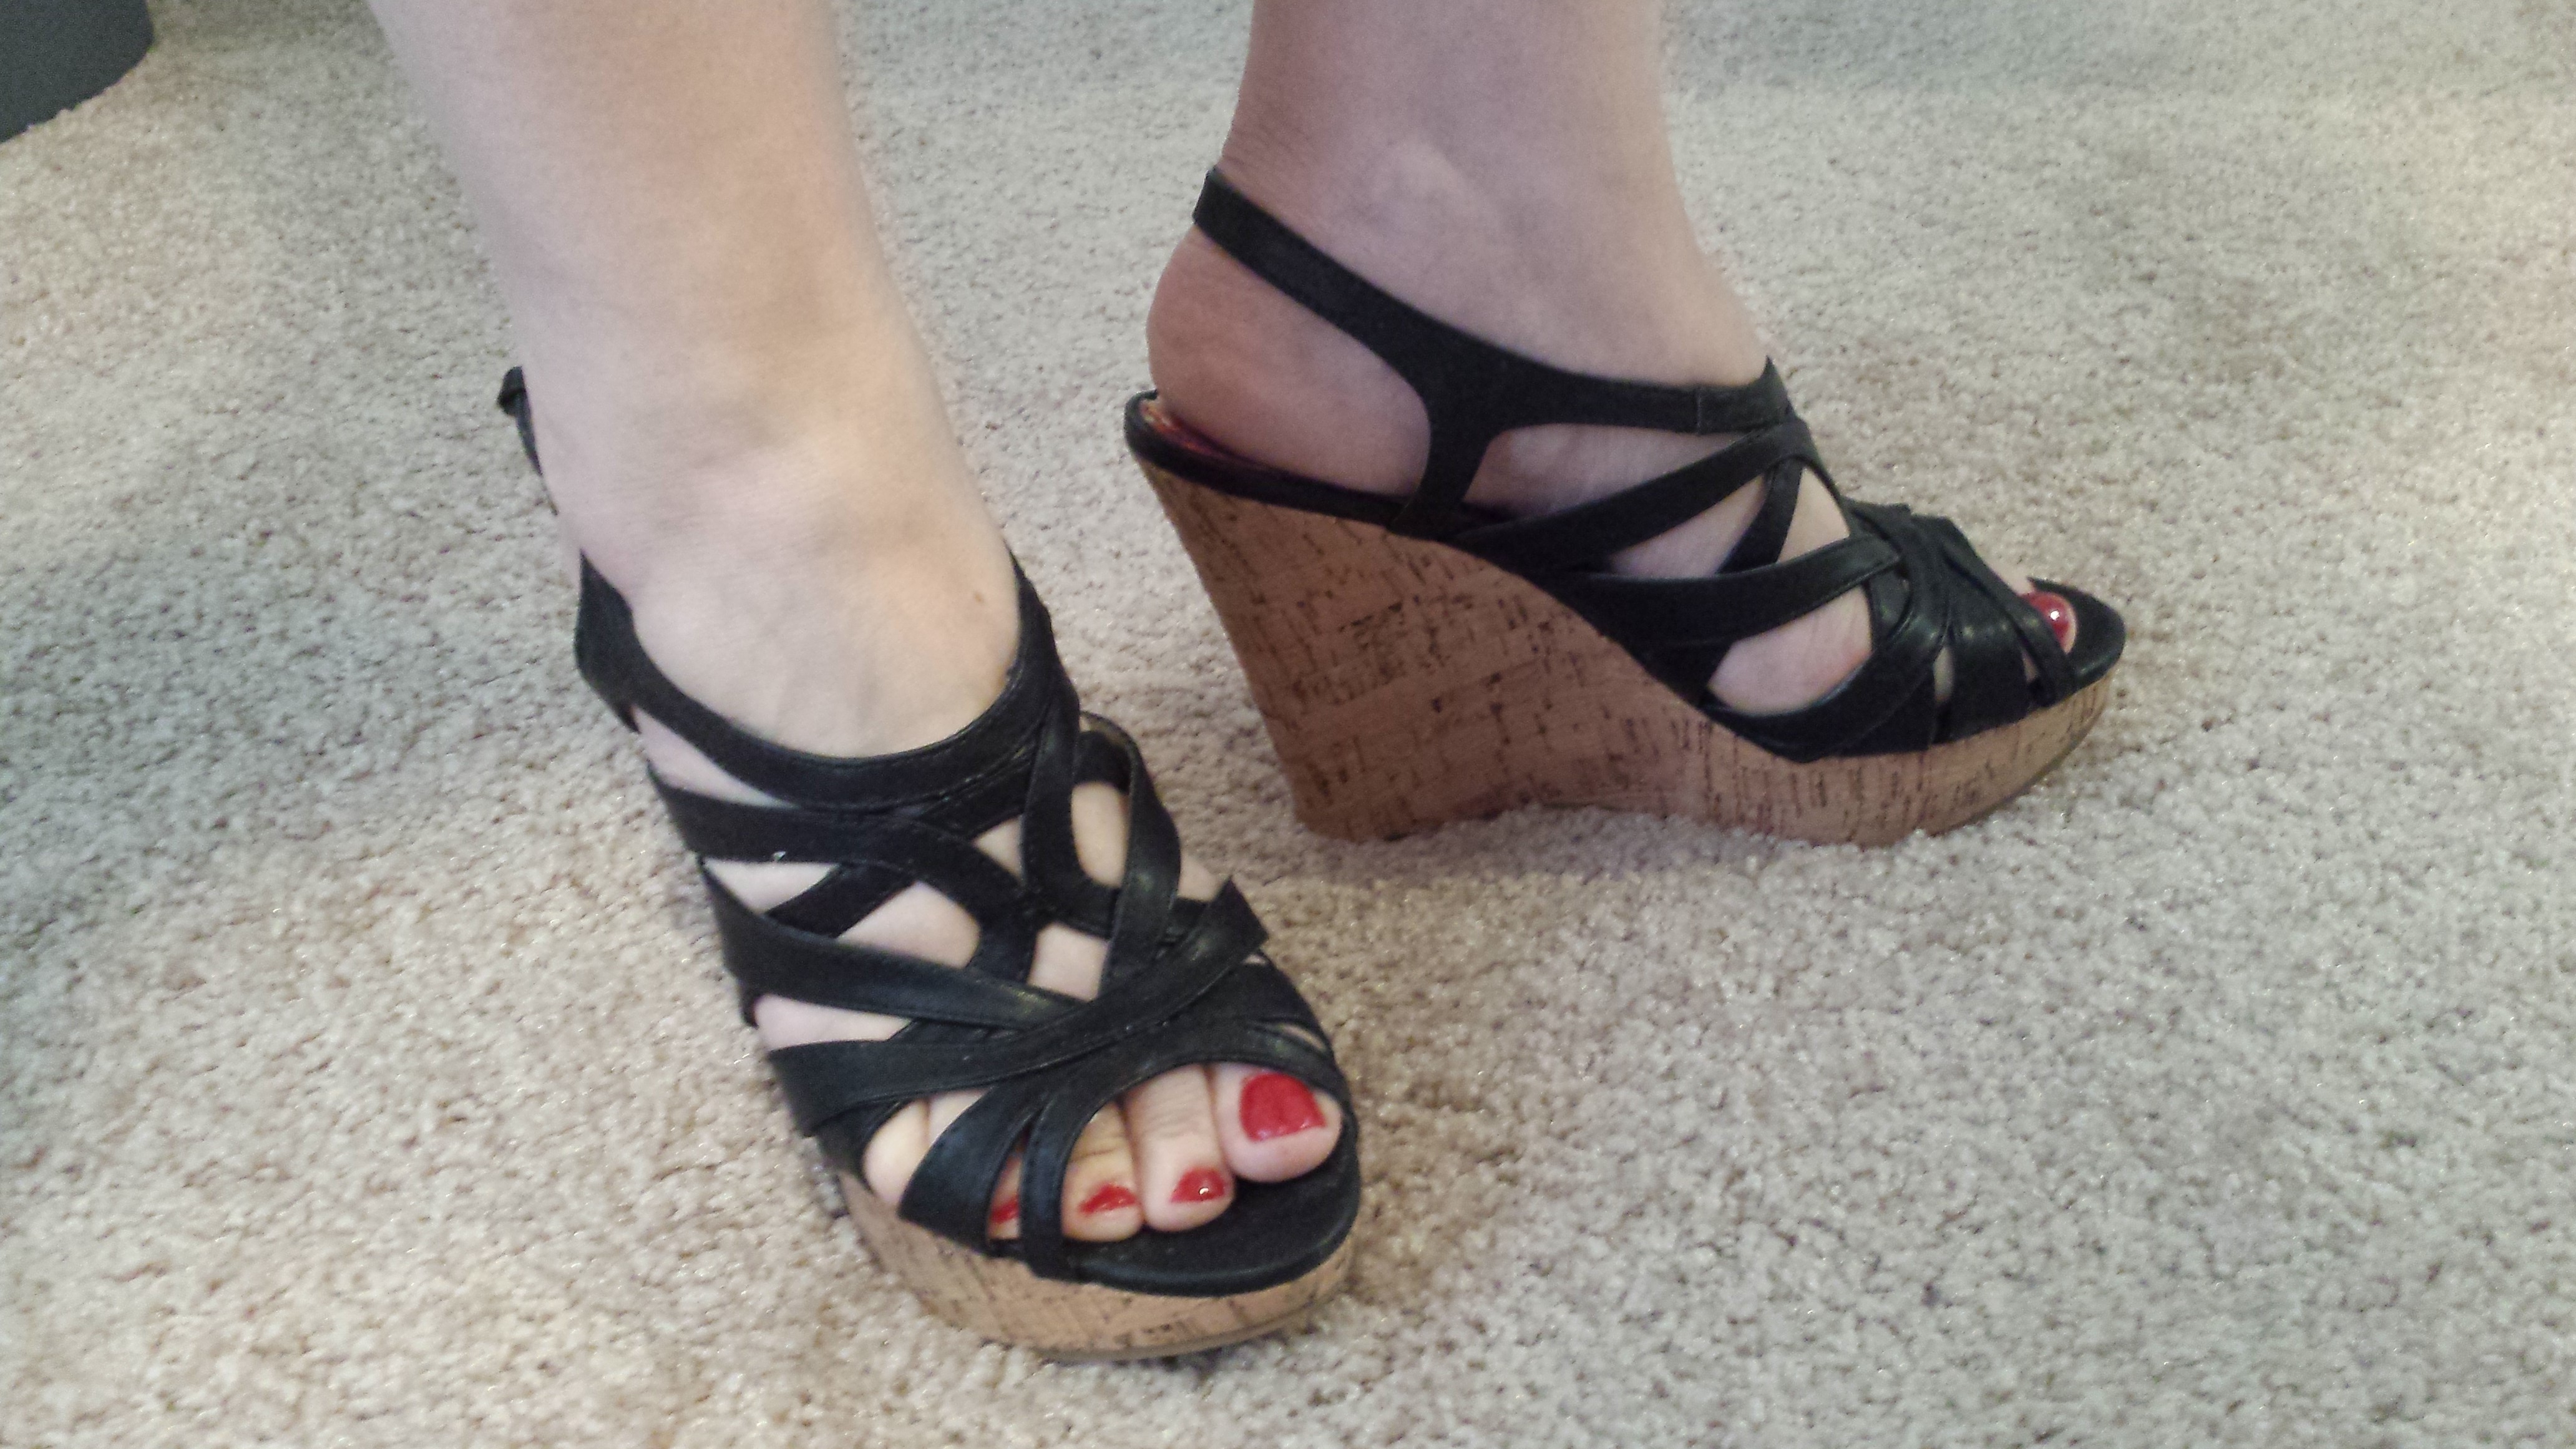 Feet wear. Busting bull balls with Wedge Heels - Ashleigh Aska. Woman feet Catwalk.